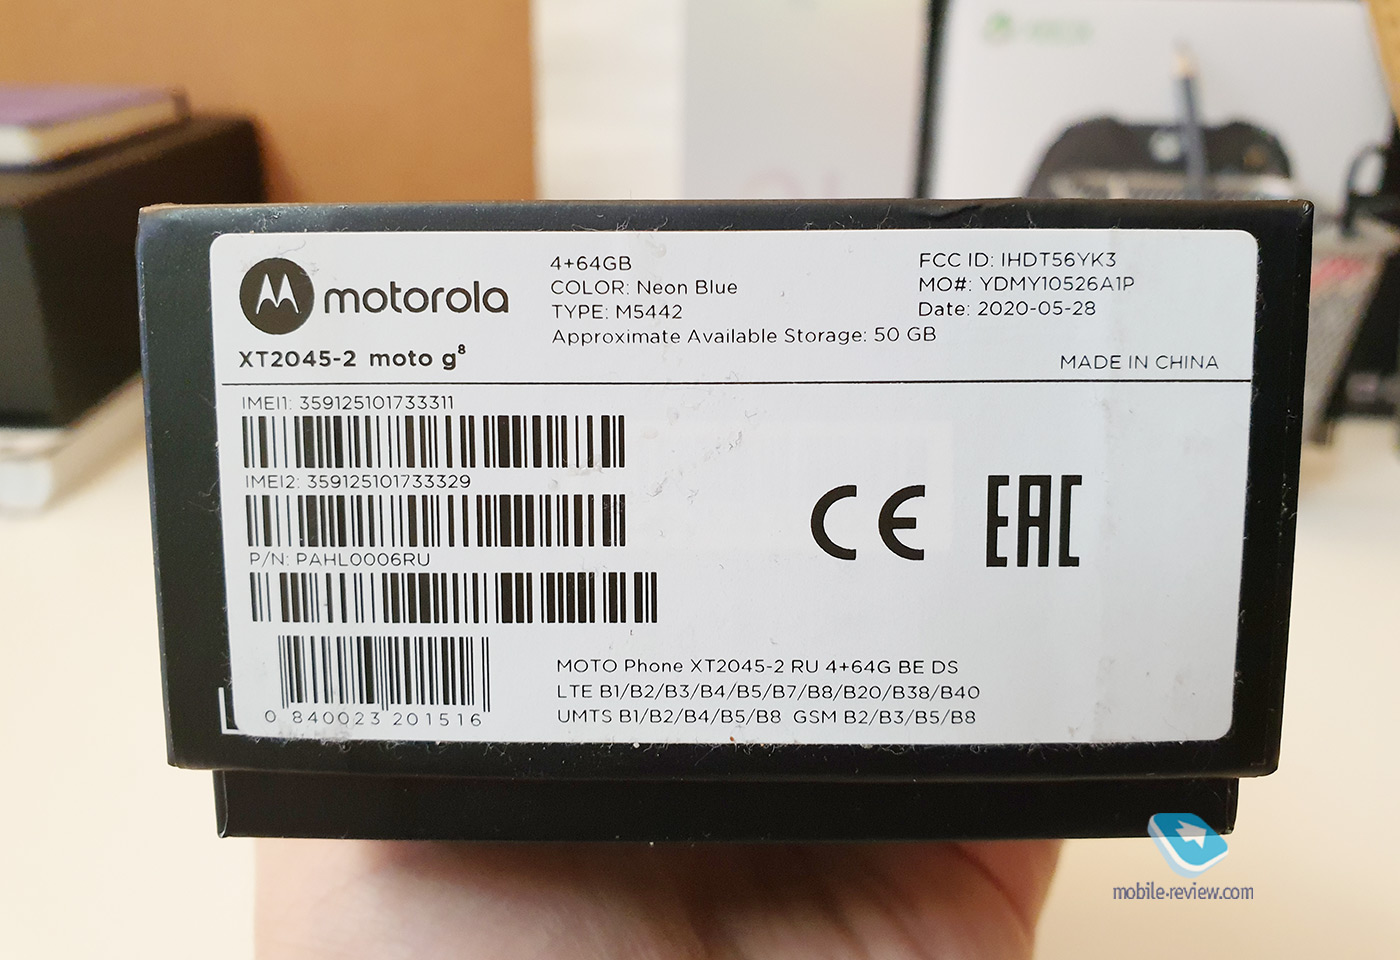 Motorola Moto G8 review for 11 rubles